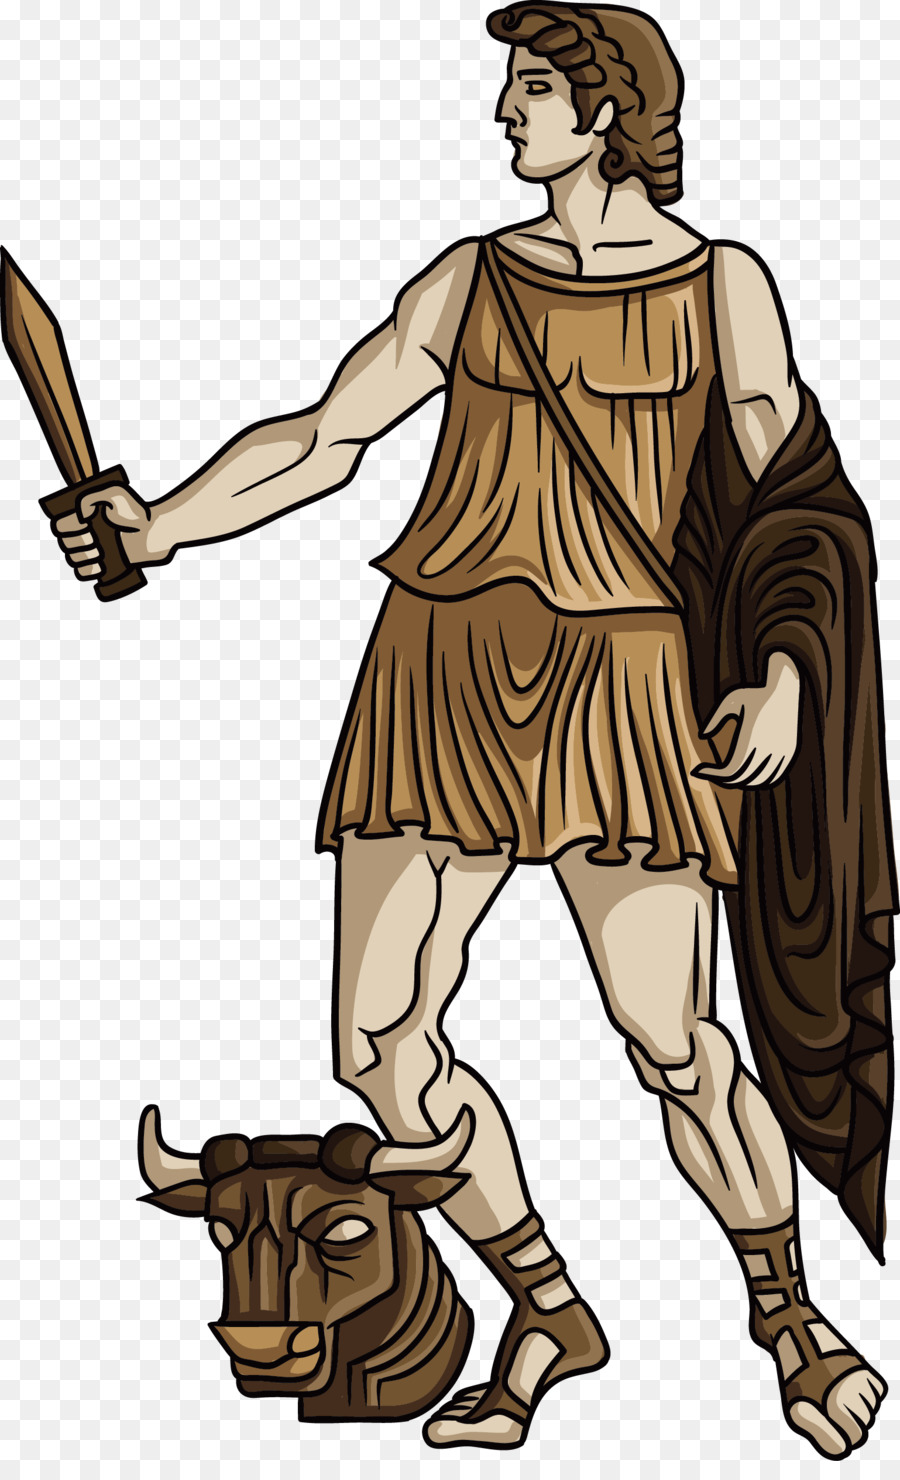 Theseus Ancient Greece Greek Mythology Heracles Illustration   The Man With The Dagger - Greek Mythology, Transparent background PNG HD thumbnail